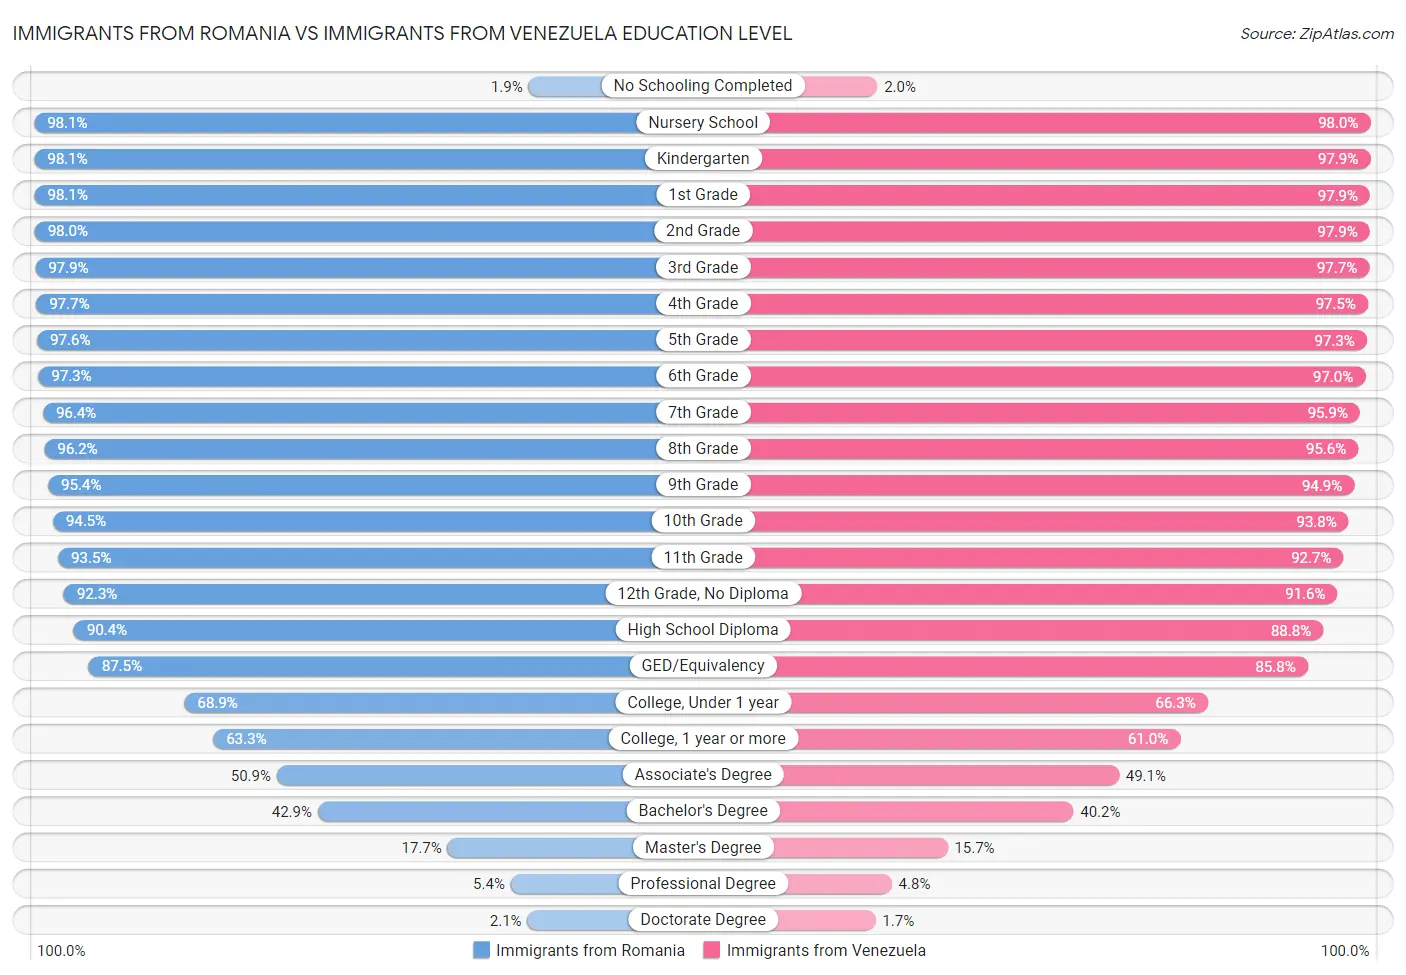 Immigrants from Romania vs Immigrants from Venezuela Education Level